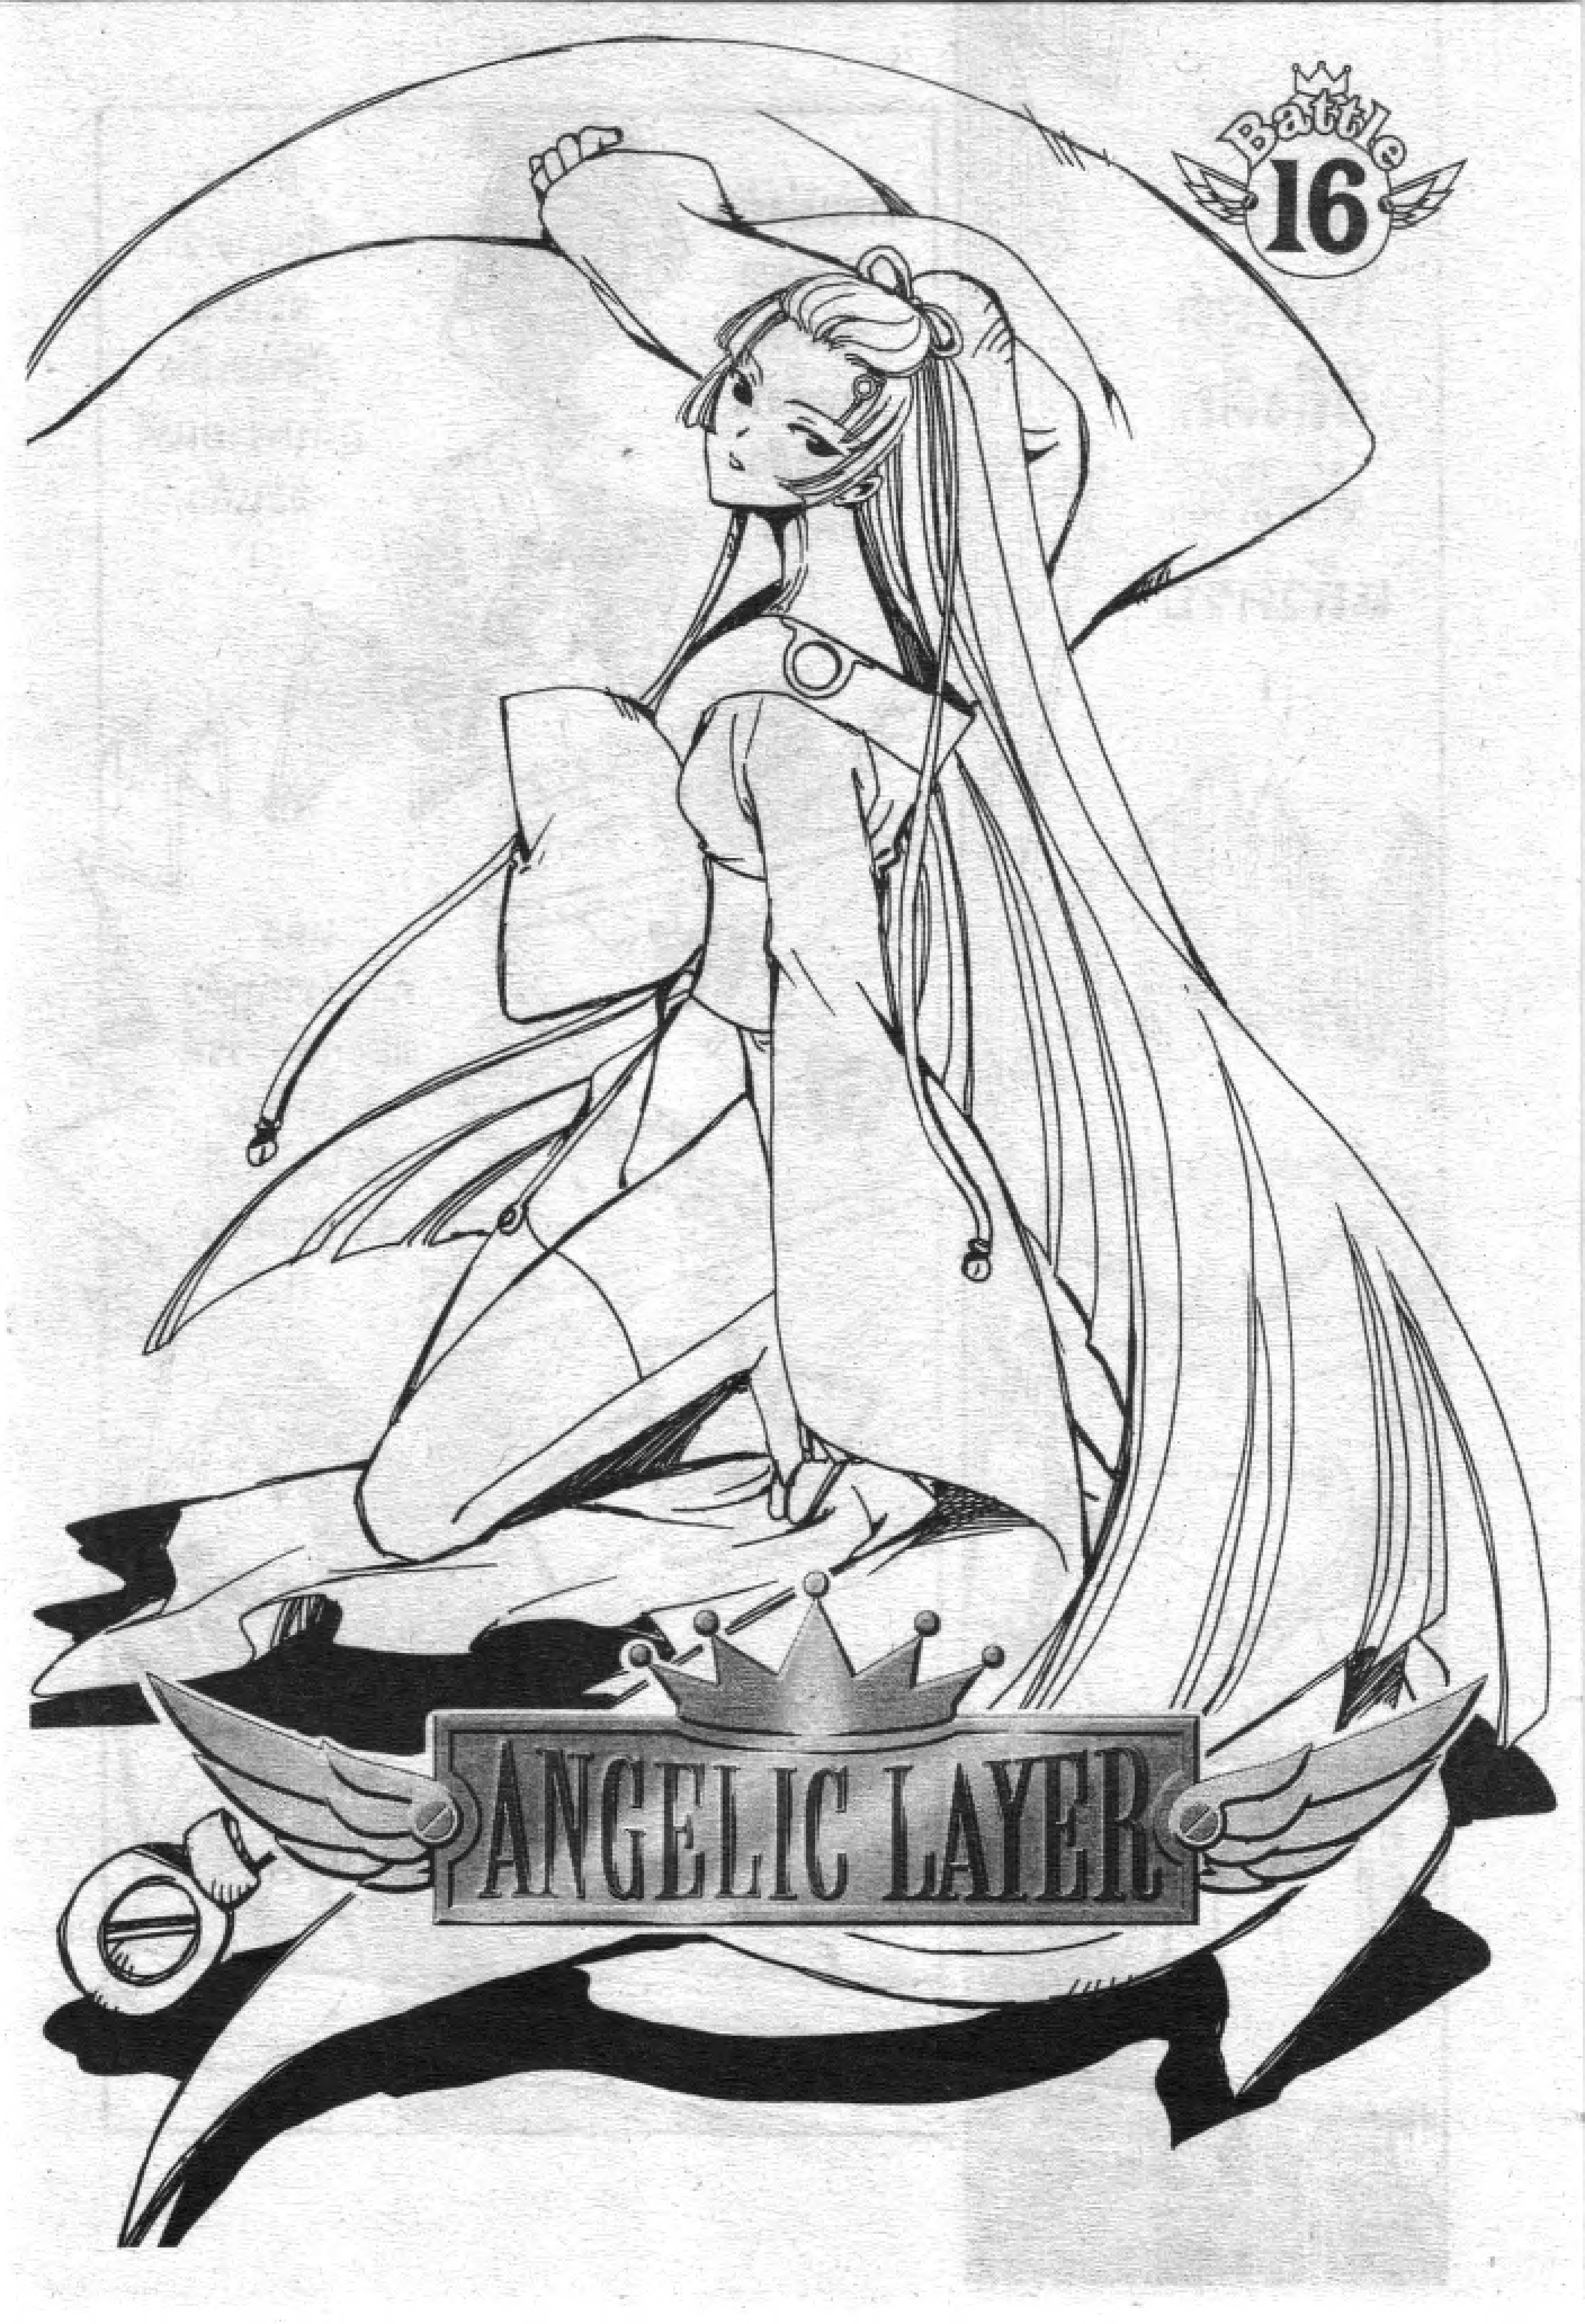 Angelic Layer